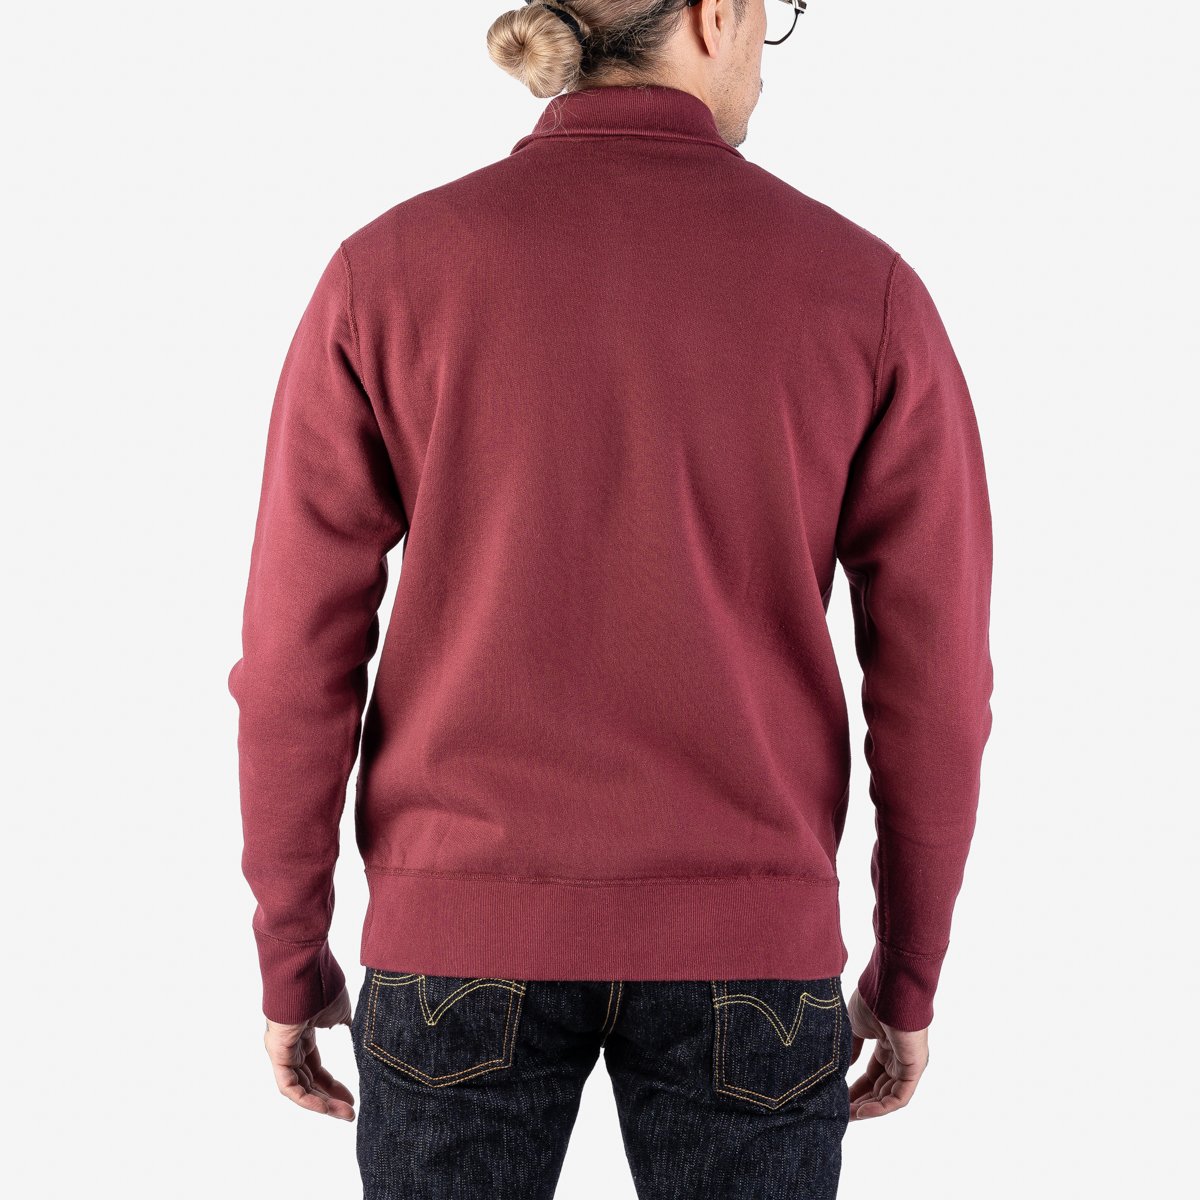 14oz Ultra Heavyweight Loopwheel Cotton Zip Up Sweater - Burgundy